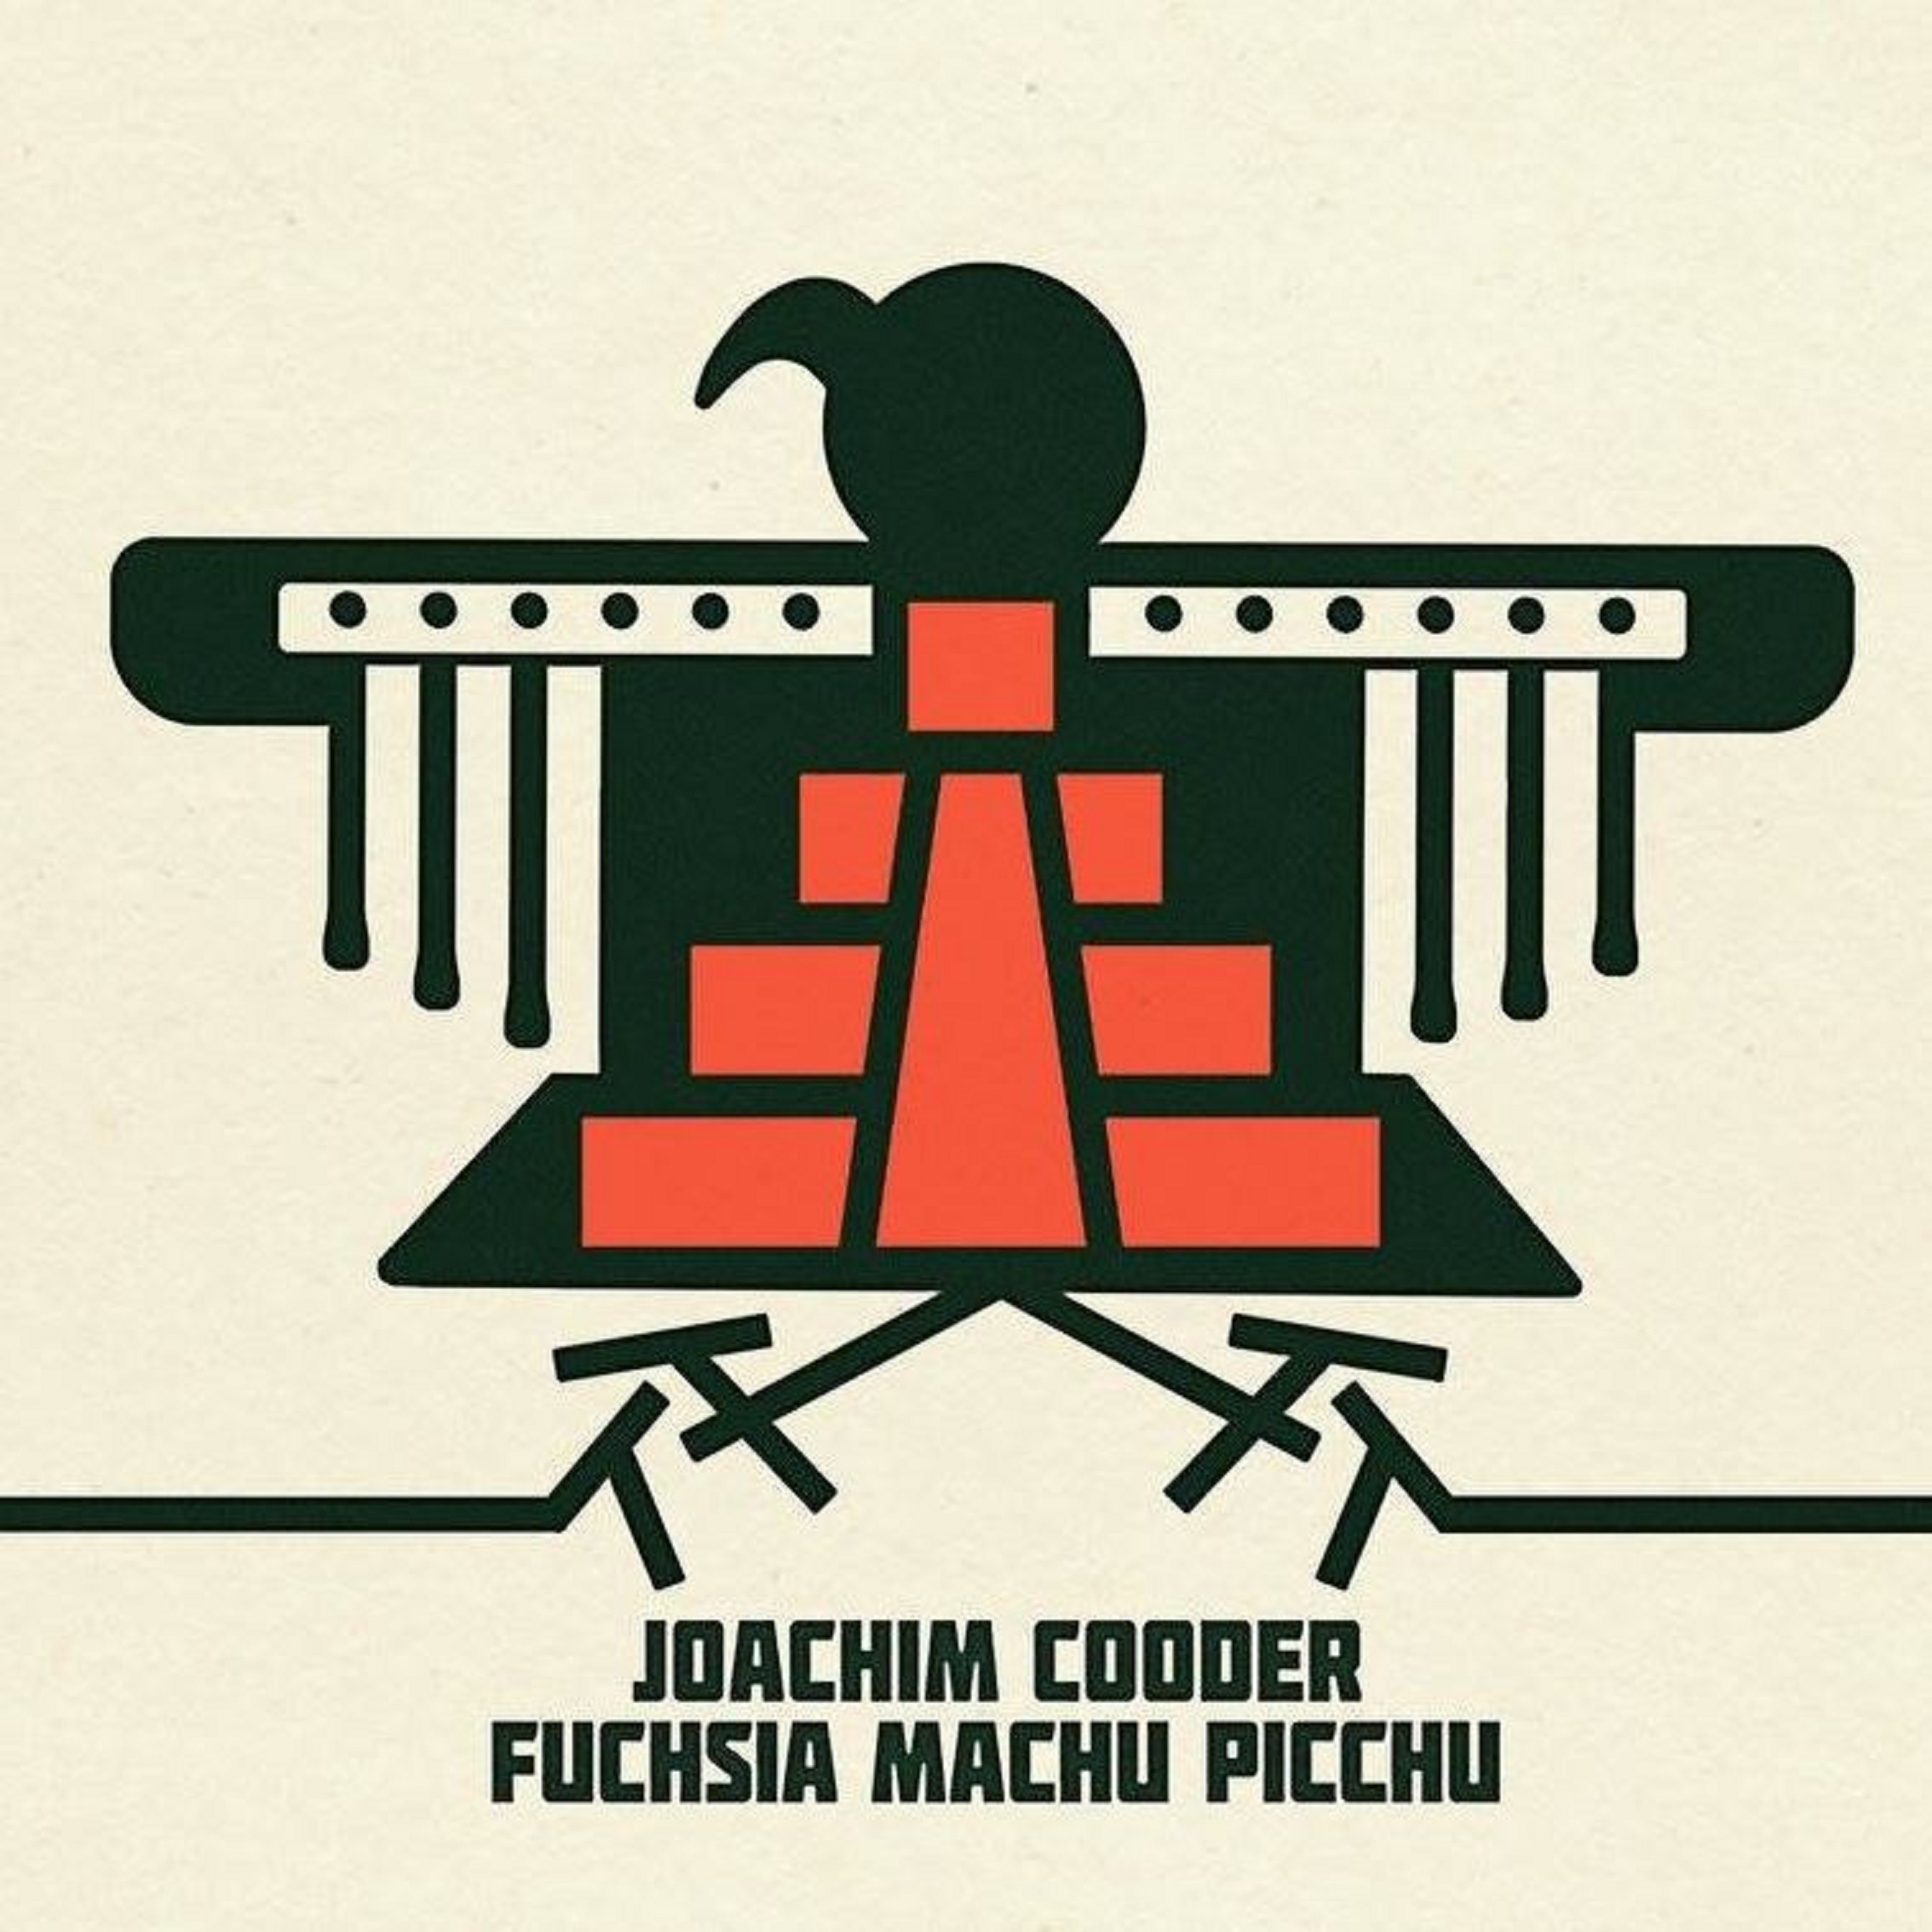 Joachim Cooder to release "Fuchsia Machu Picchu" on March 30th